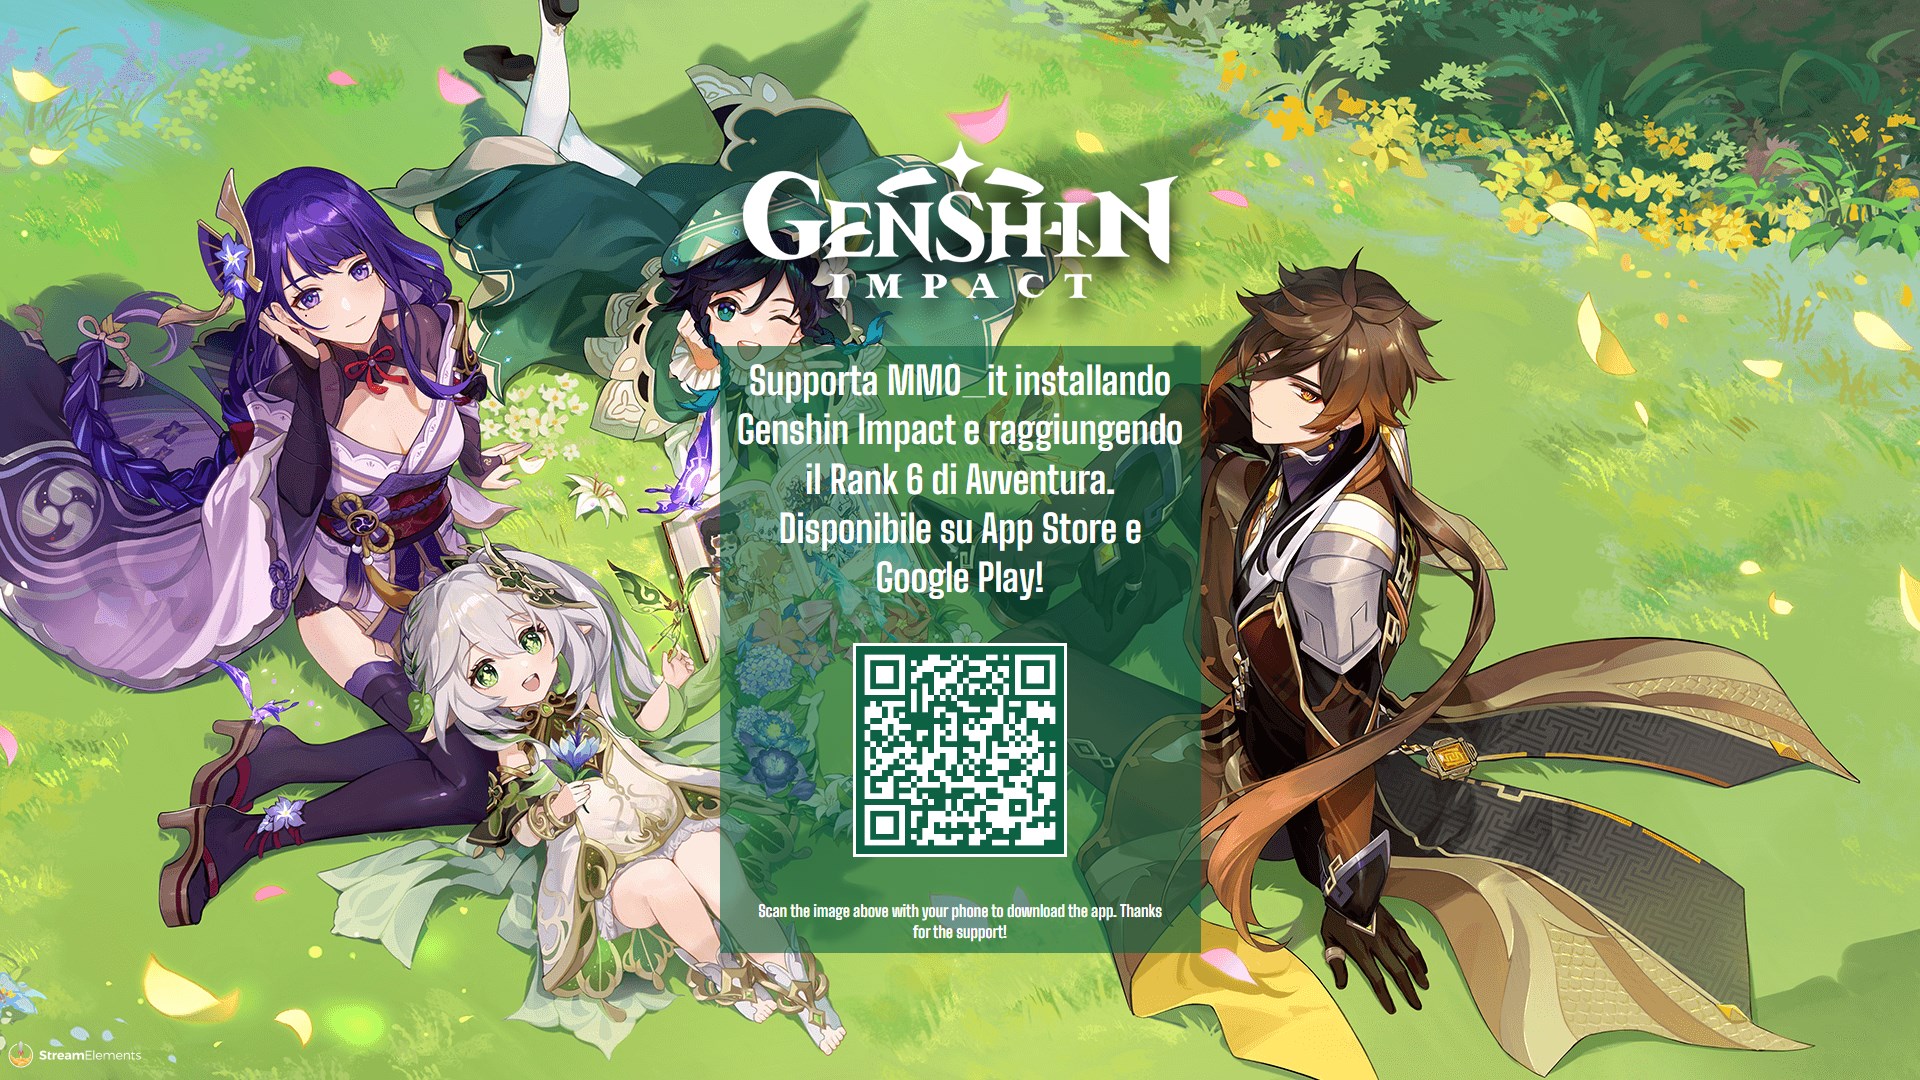 Sponsorship Genshin Impact mmo.it Genshin Impact partnership mmo.it genshin impact 2022